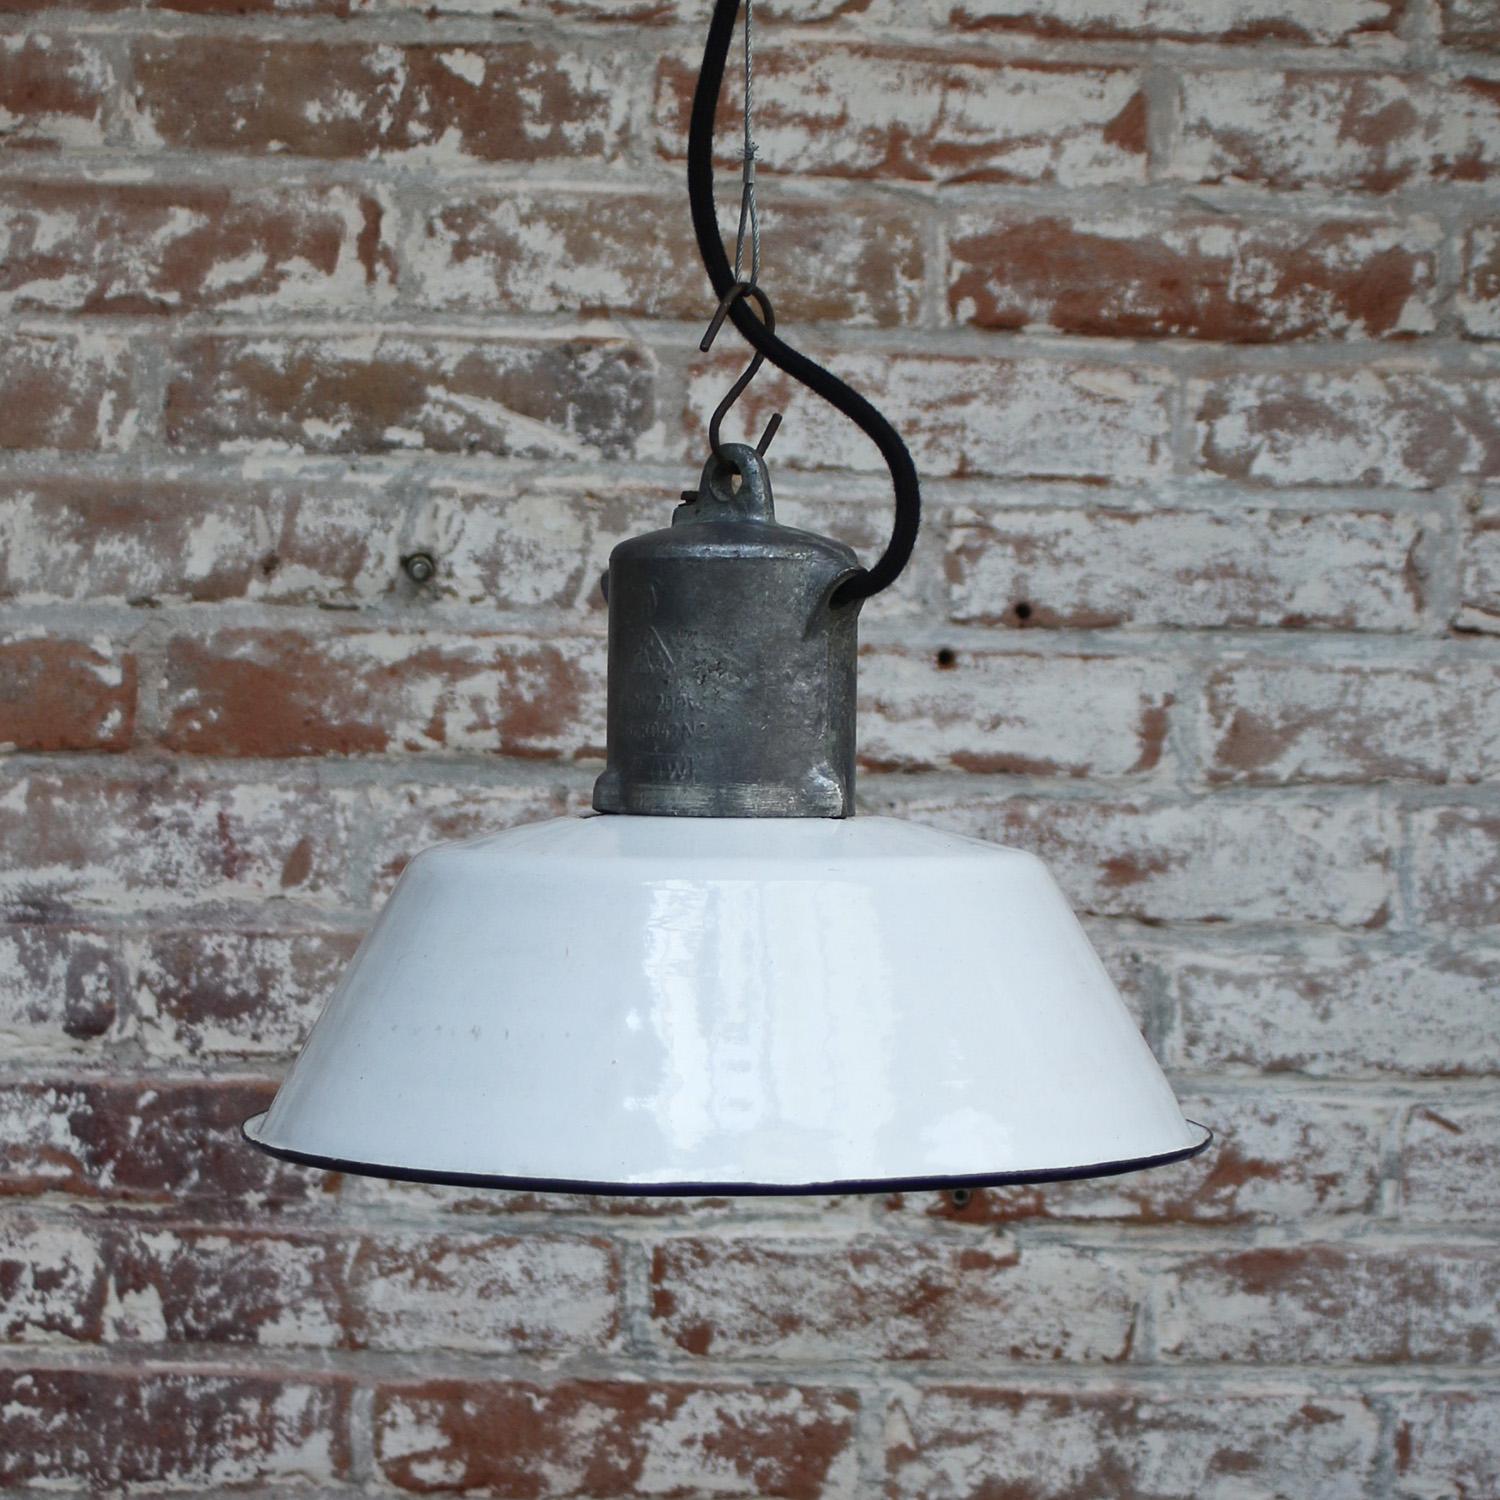 White Enamel Vintage Industrial Cast Aluminium Pendant Light In Good Condition For Sale In Amsterdam, NL